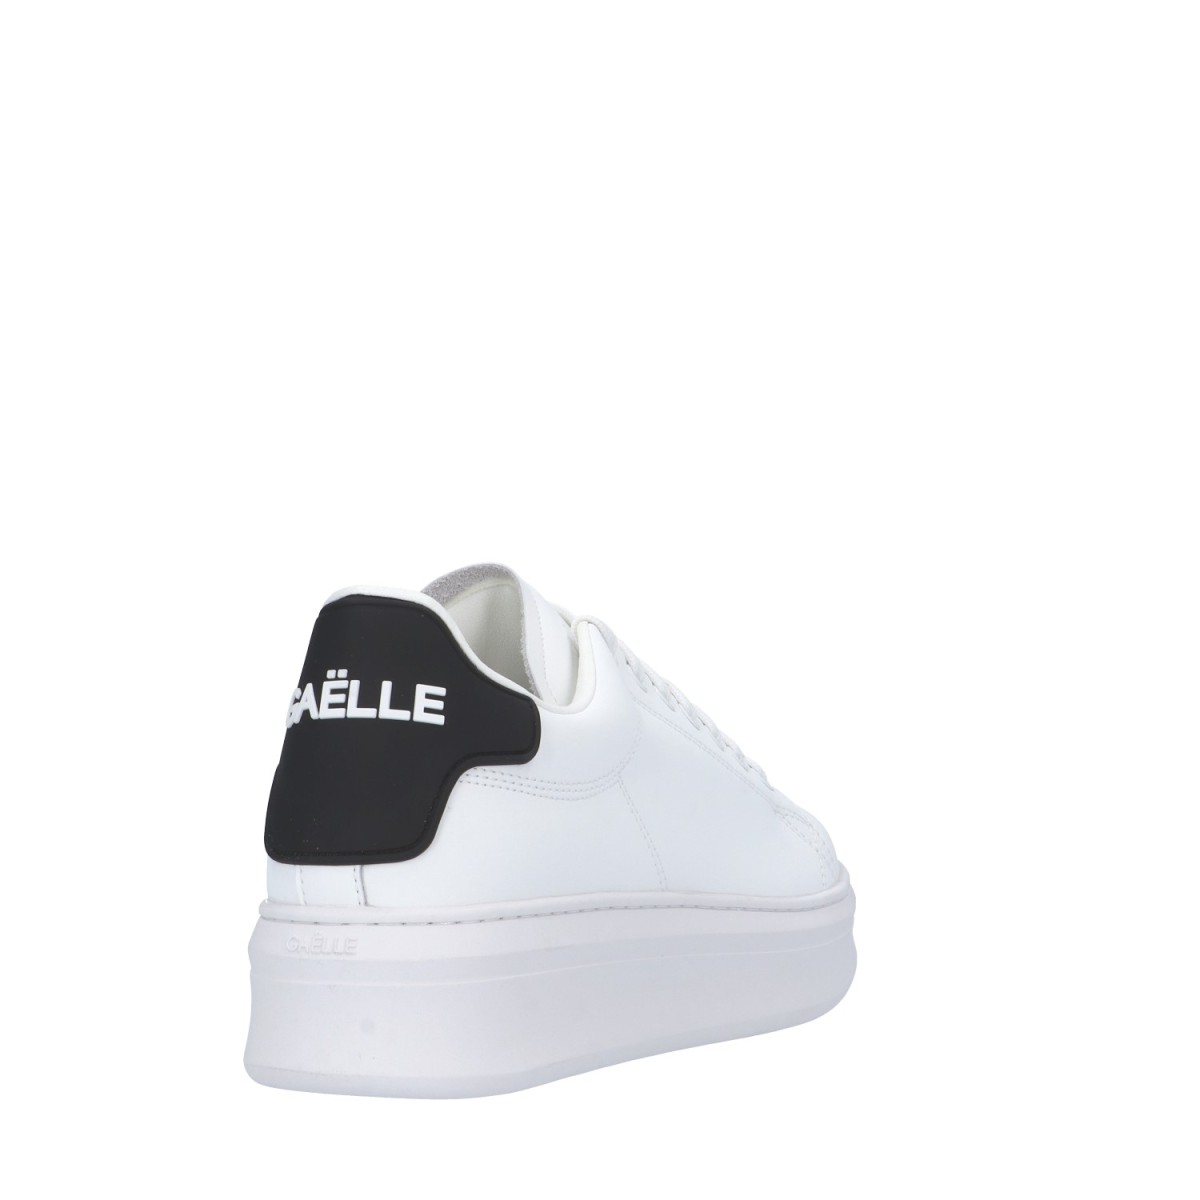 Gaelle Sneaker Bianco/nero Gomma GACAM00001